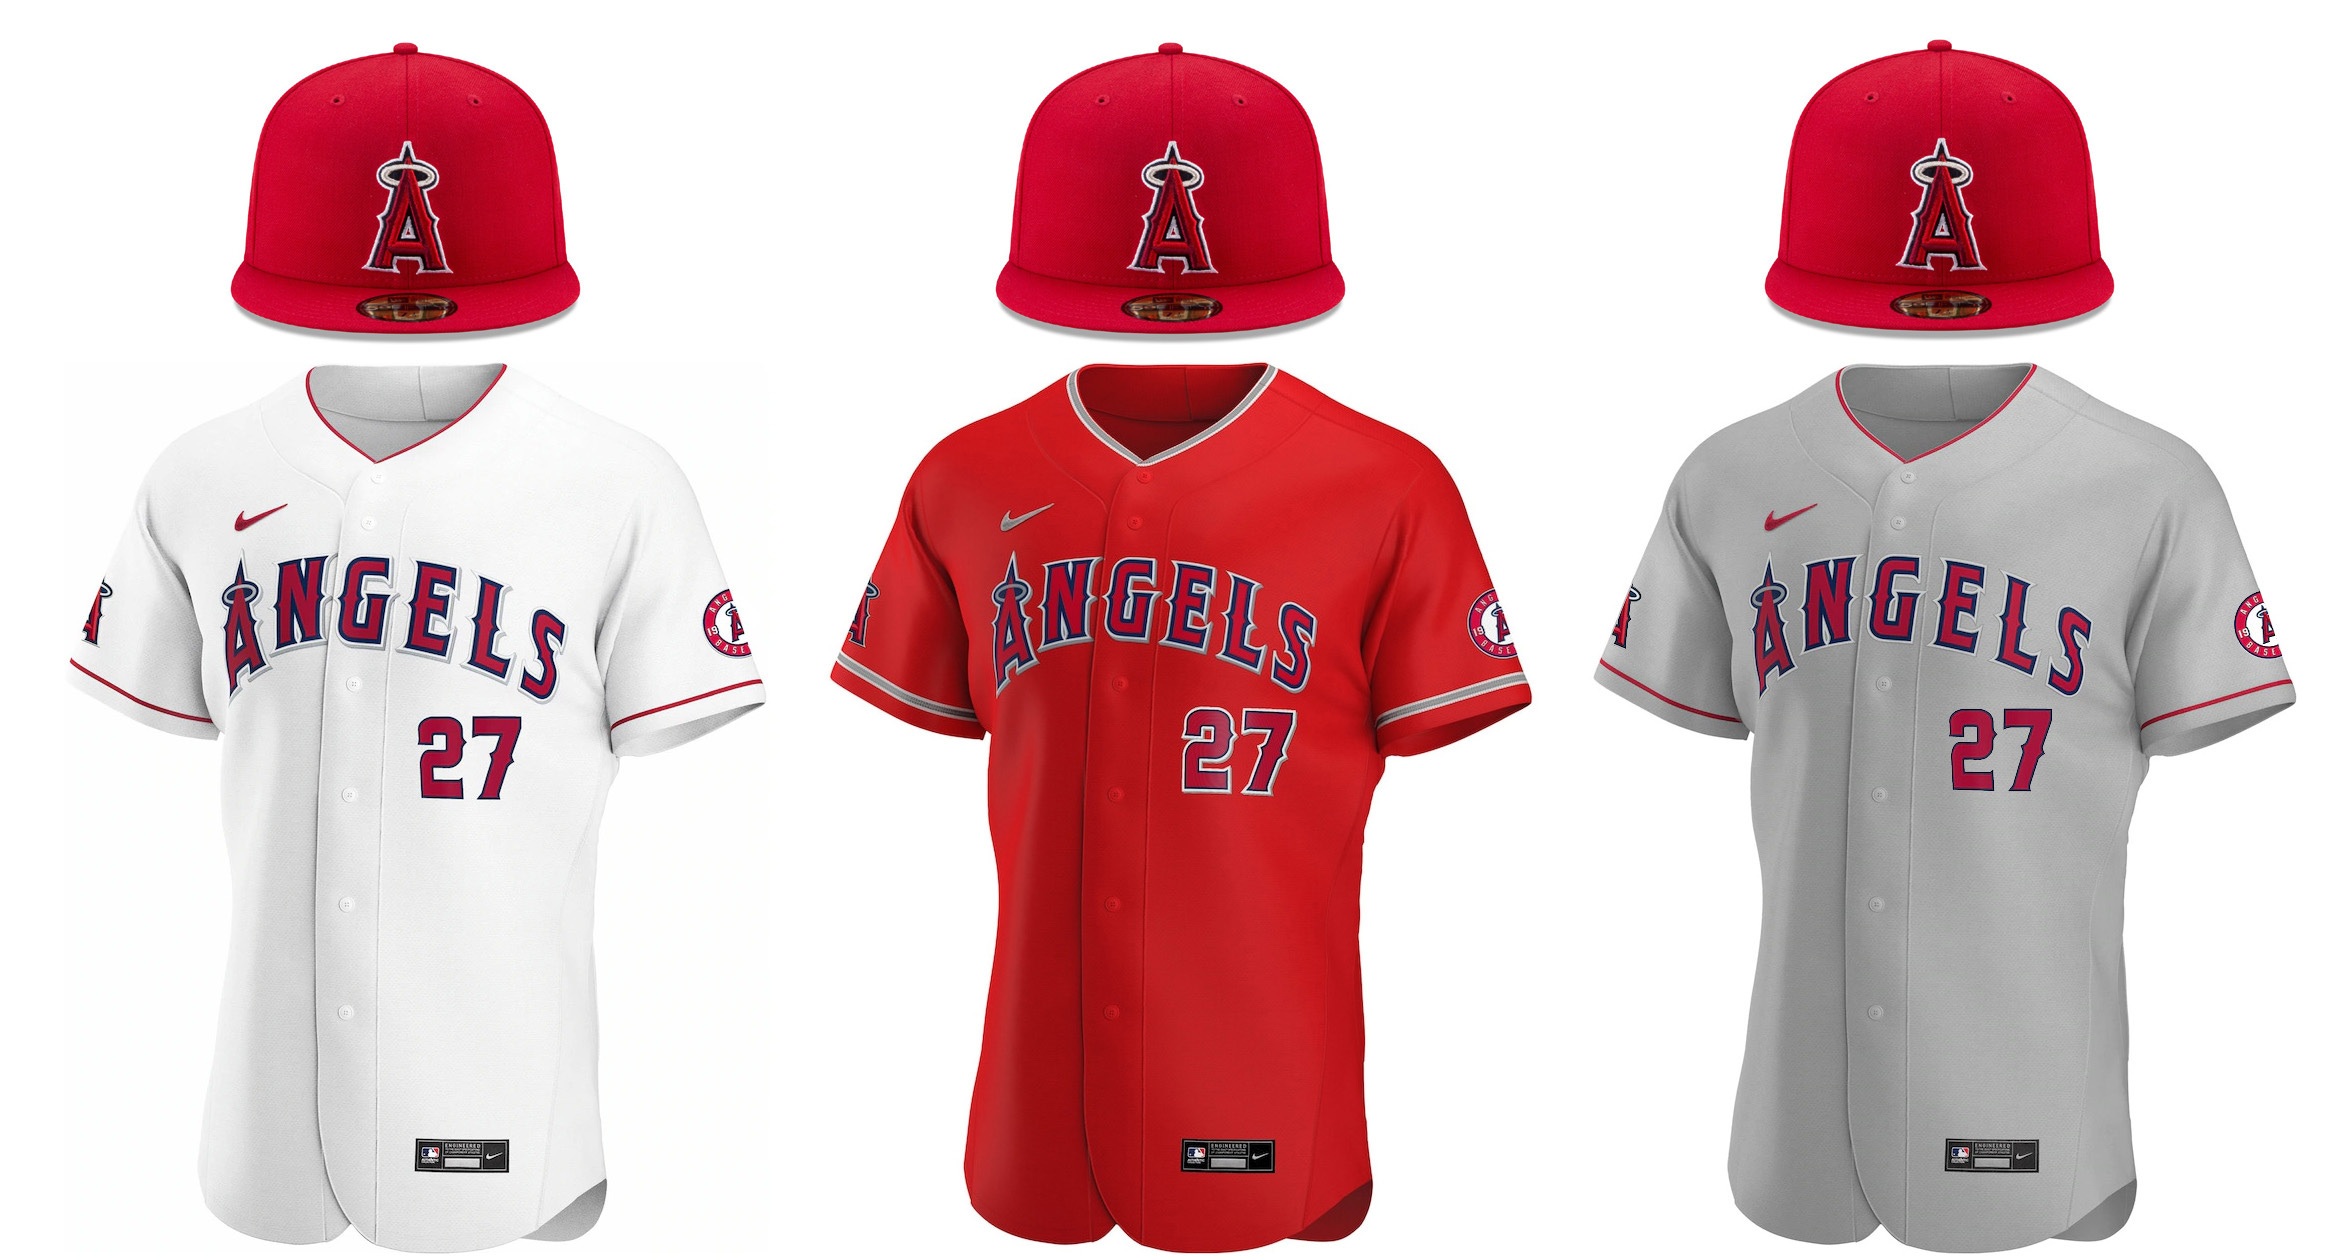 Anaheim Angels Alternate Uniform - American League (AL) - Chris Creamer's  Sports Logos Page 